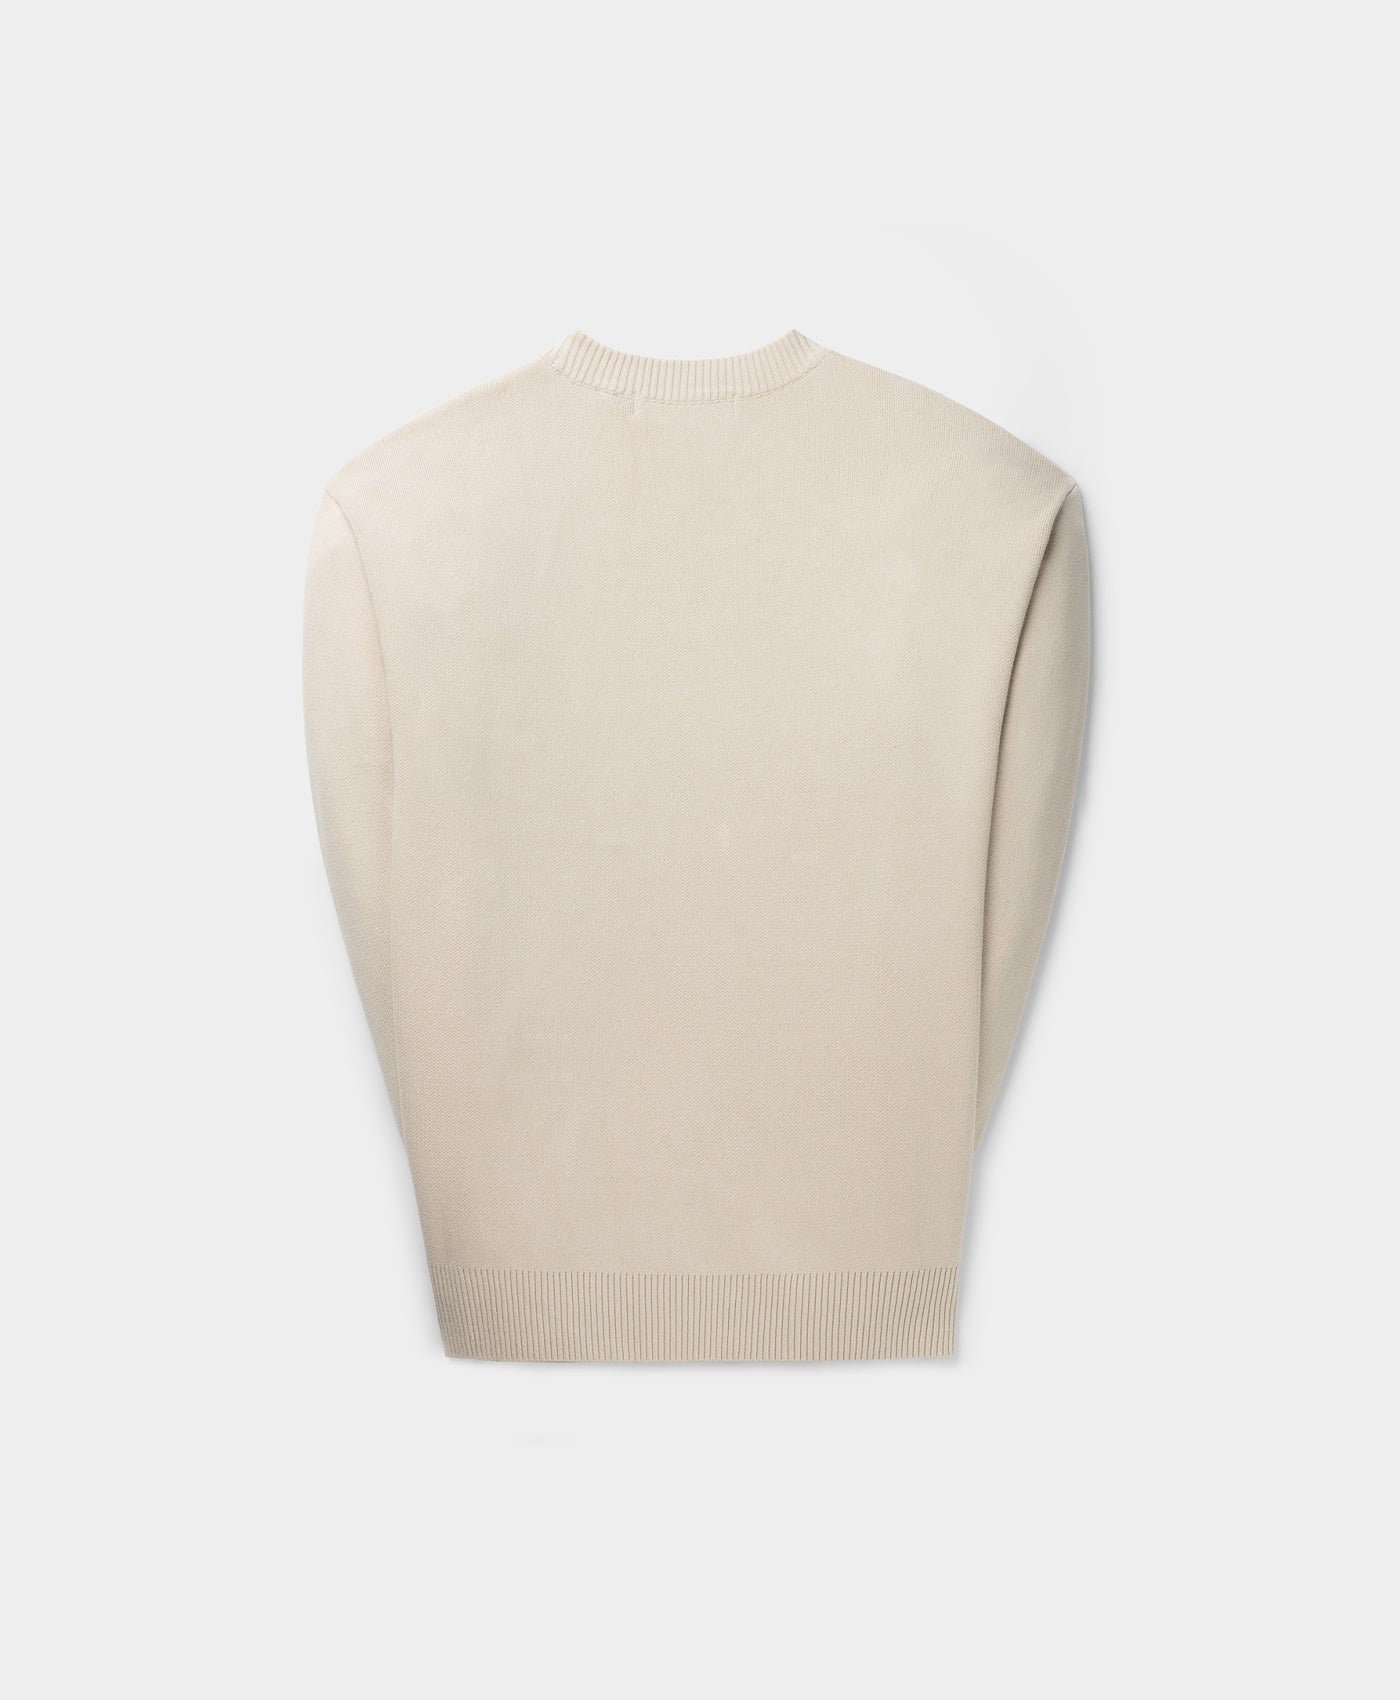 DP - White Sand Pelaz Sweater - Packshot - Rear